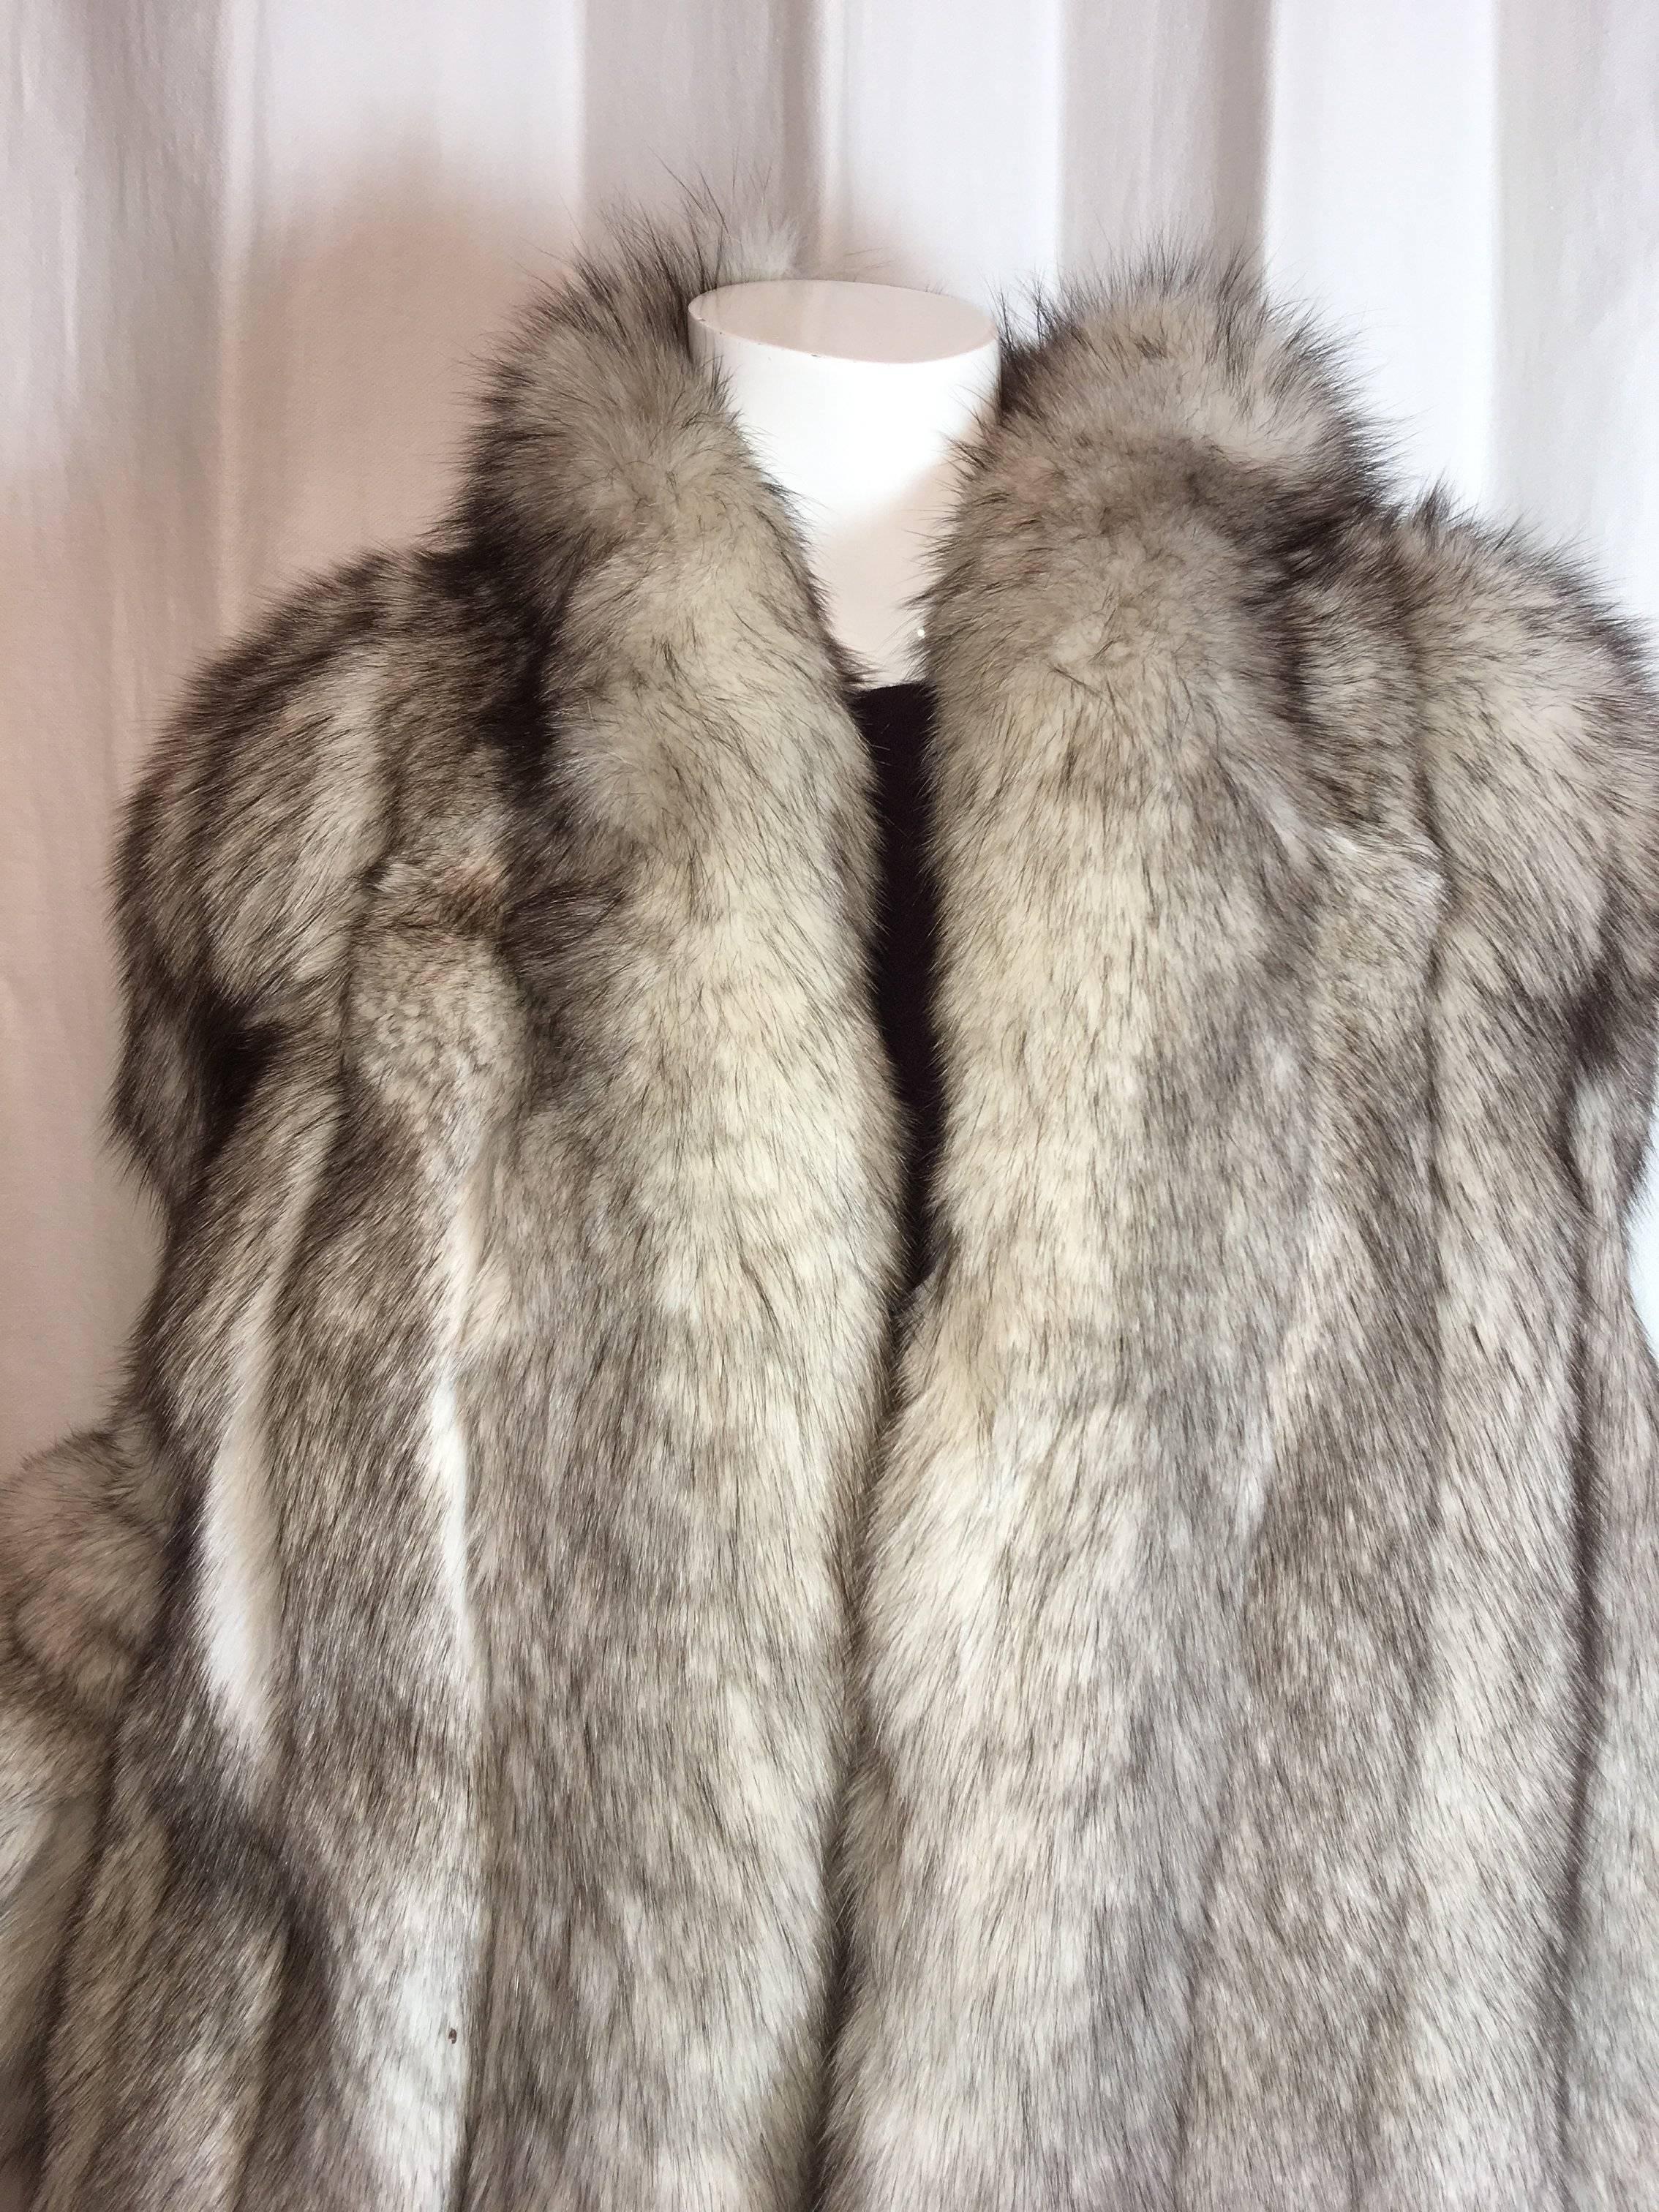 Beautiful Silver Fox Fur, no interior labels.